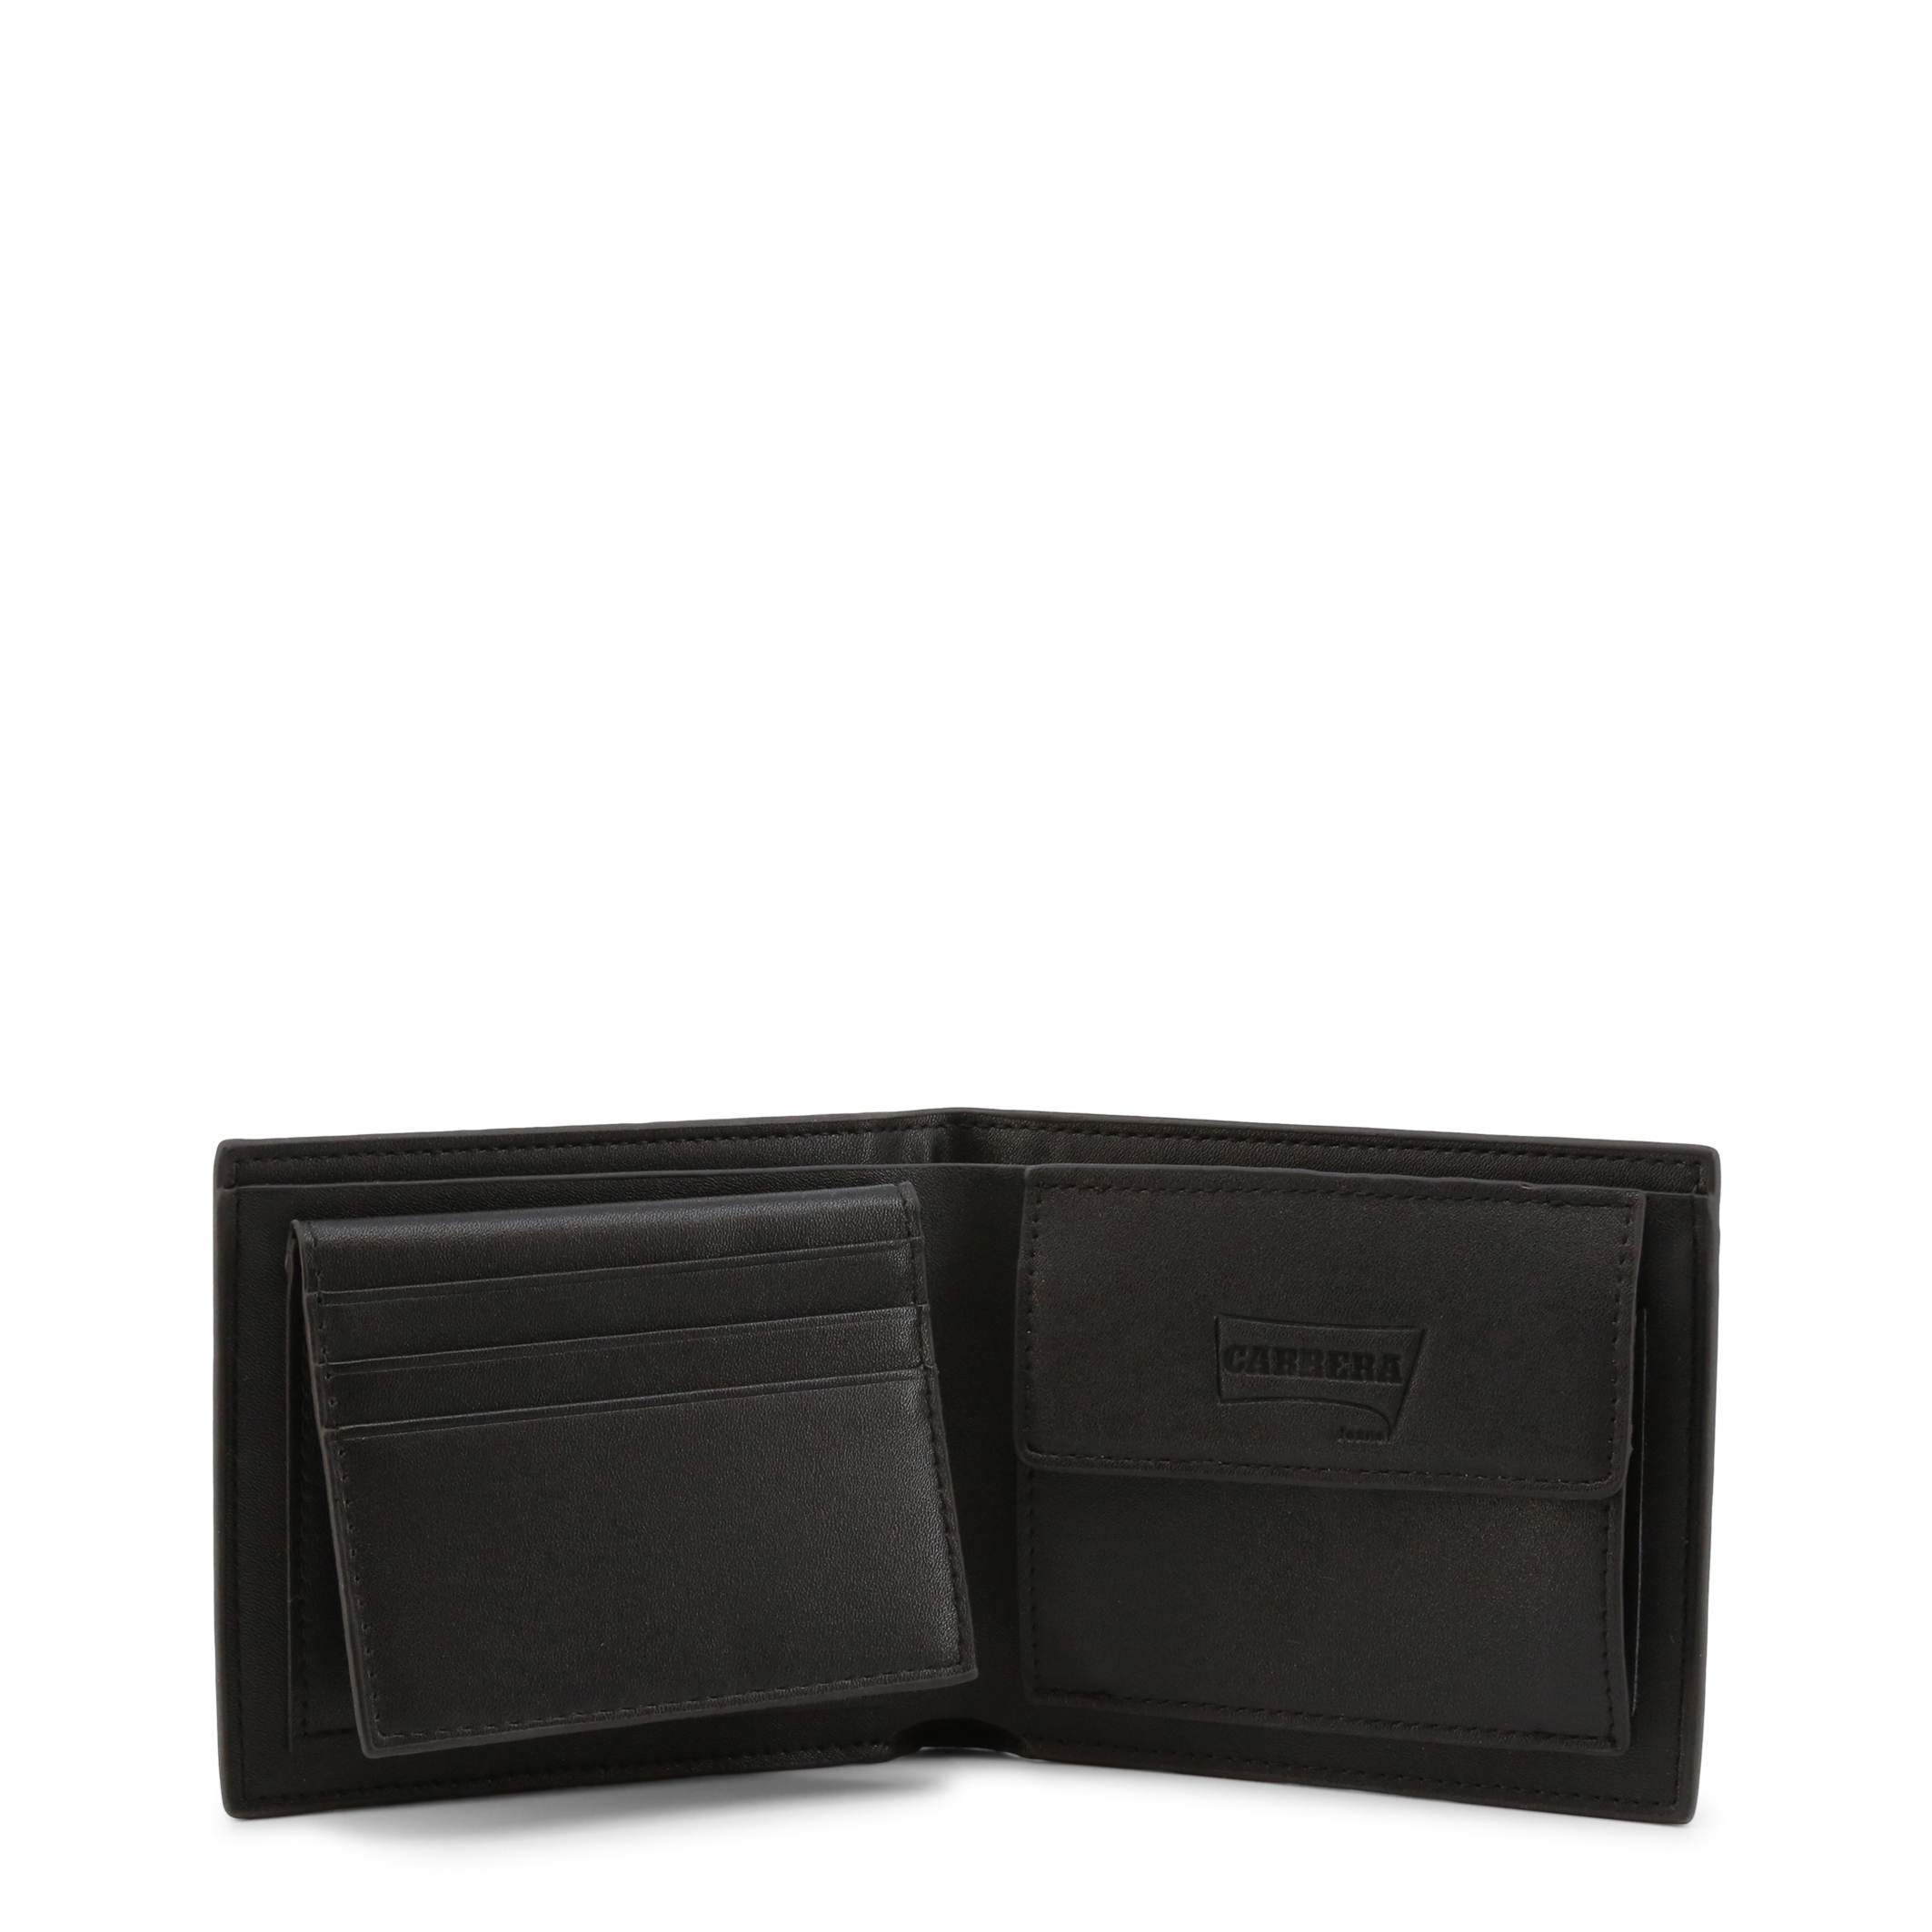 Carrera Jeans Black Wallets for Men - GORDON_CB6552